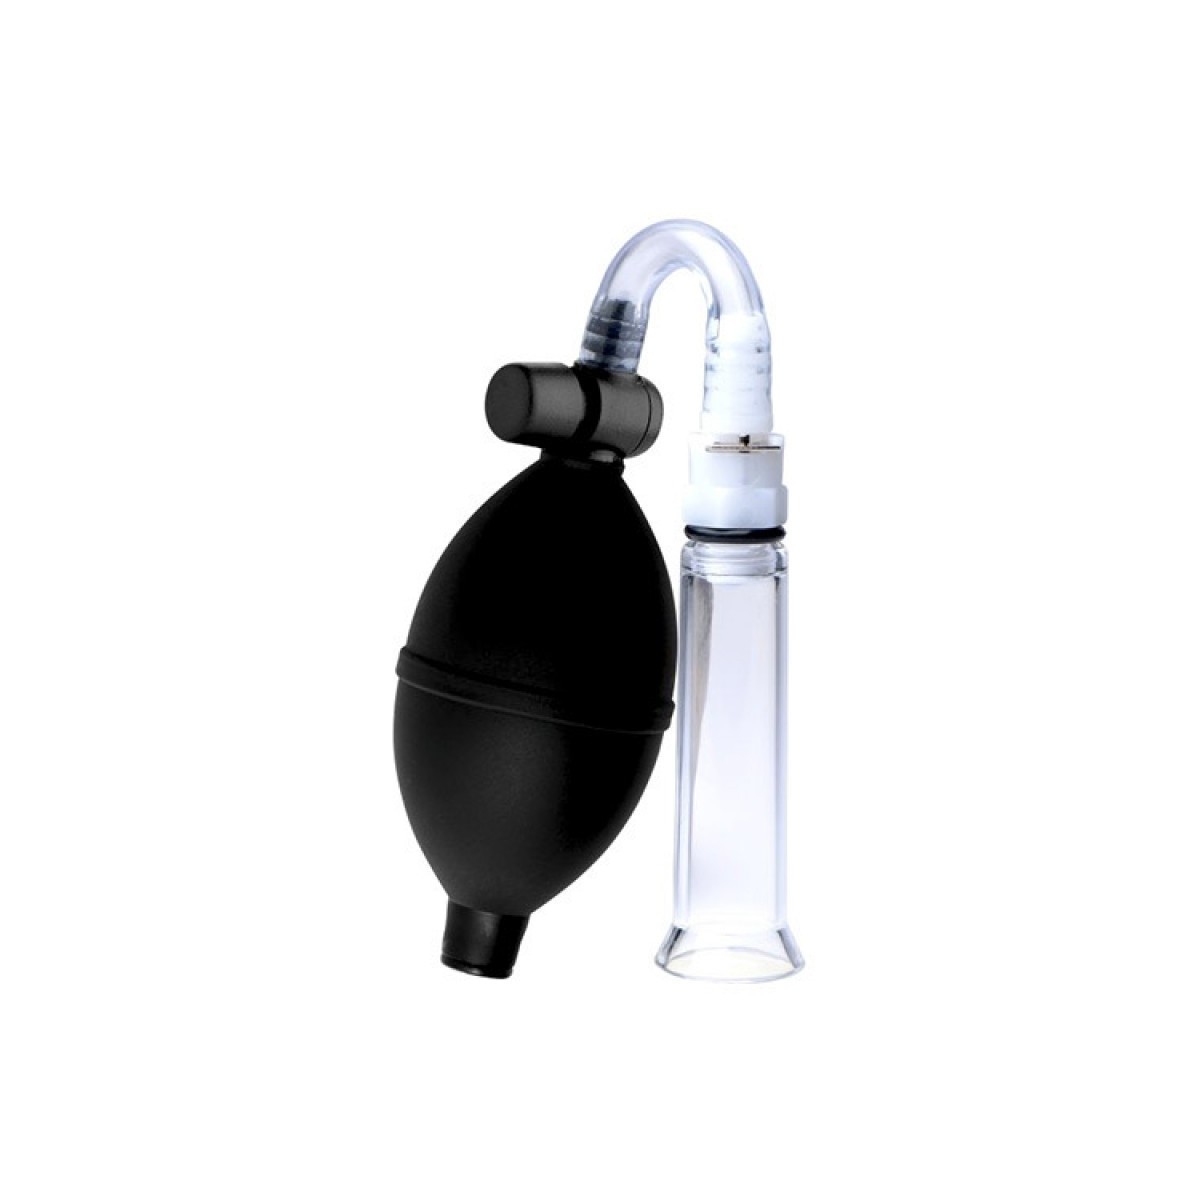 Pompa clitoridea clitoral pumping system